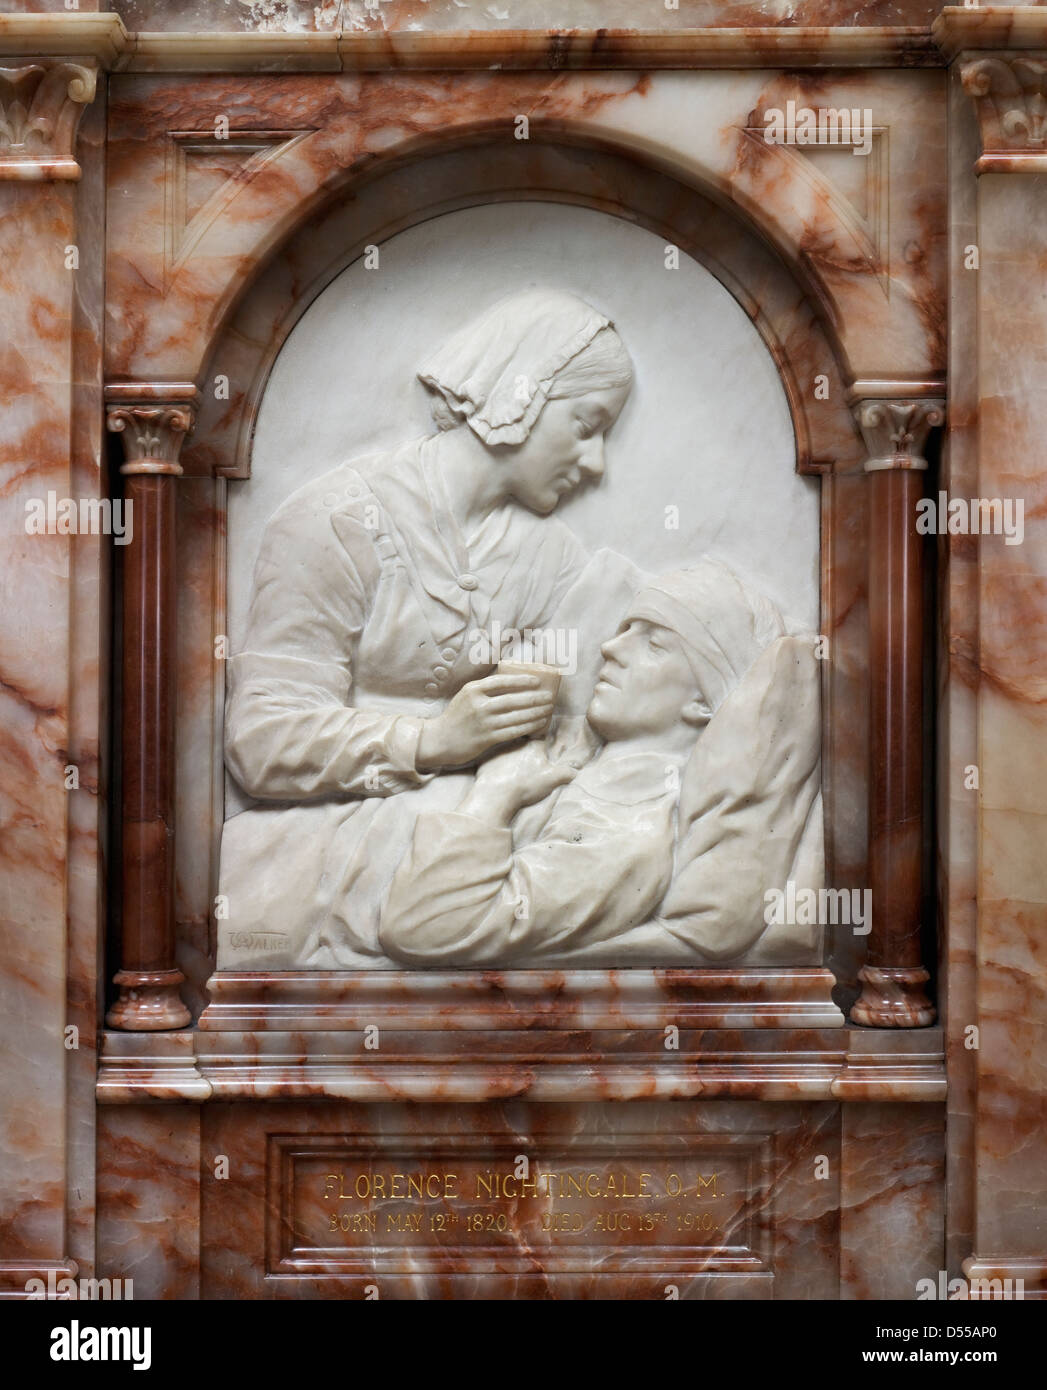 Saint Paul's Cathedral Florence Nightingale Stock Photo